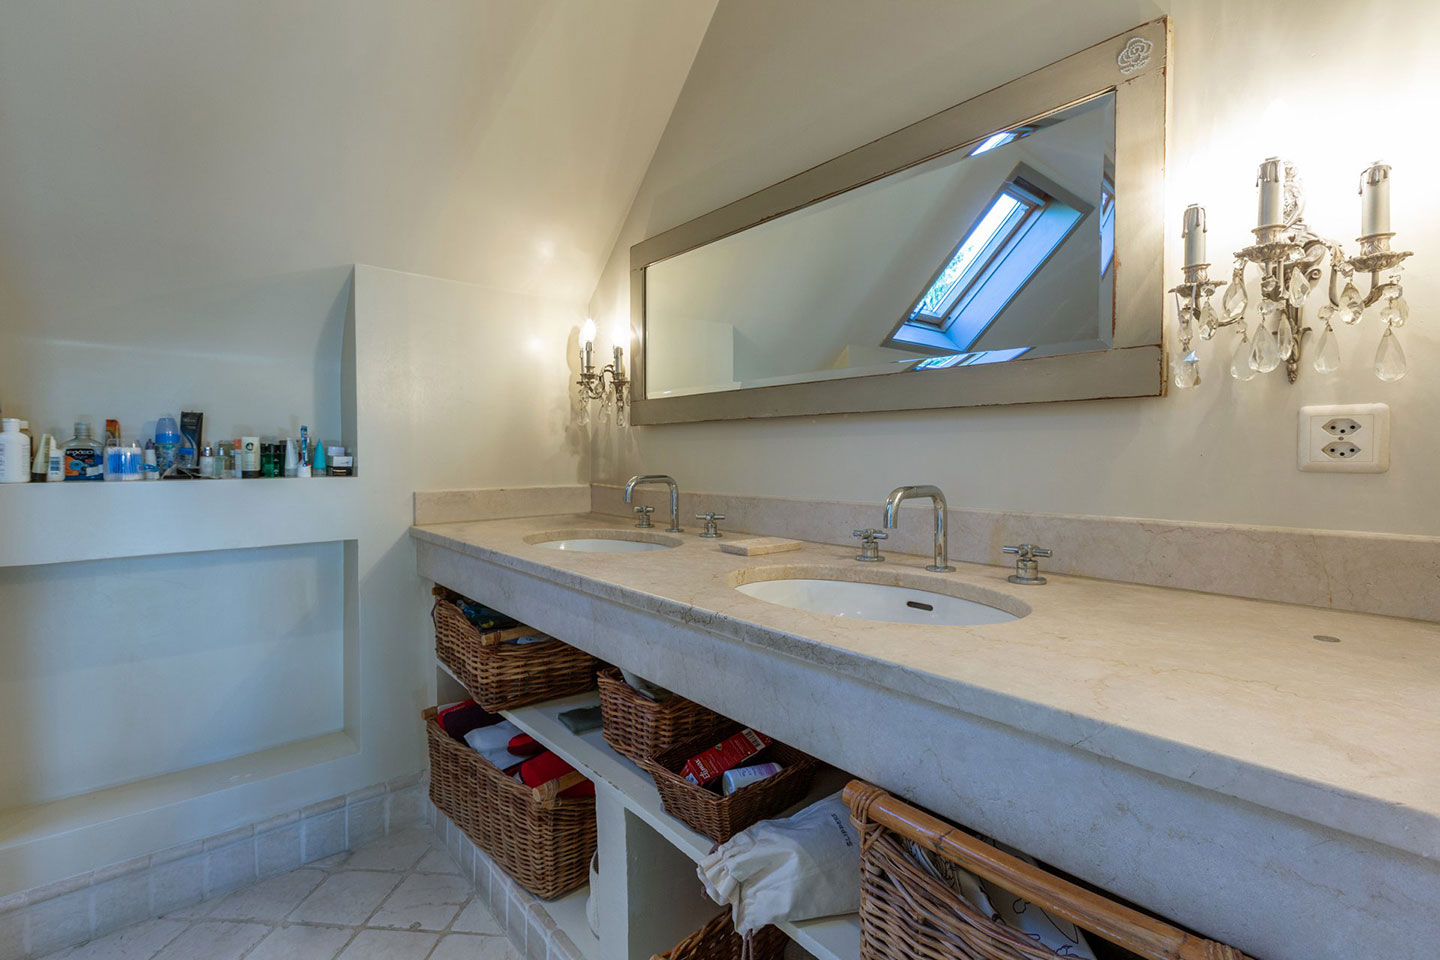 Splendid Property For Sale in Geneva Left Bank, Collonge-Bellerive | A Bathroom | Presented by Finest International | Finest Residences